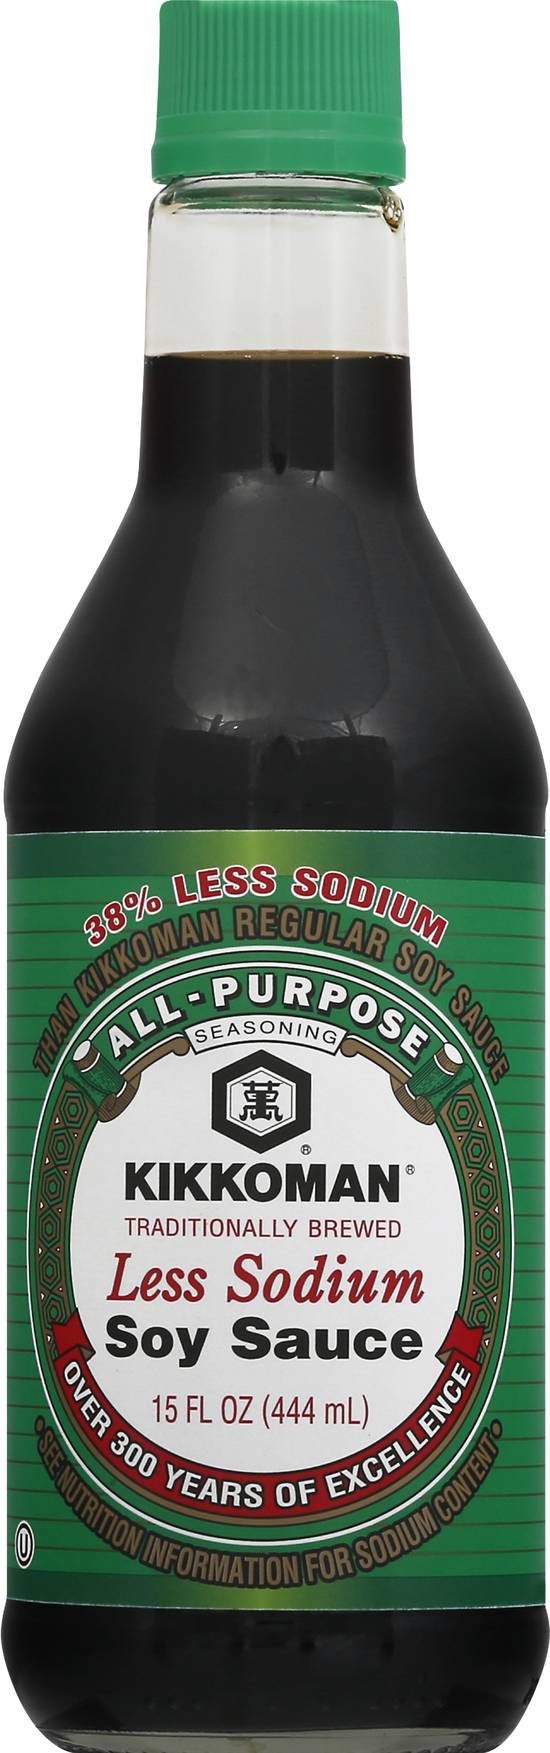 Kikkoman Less Sodium Soy Sauce